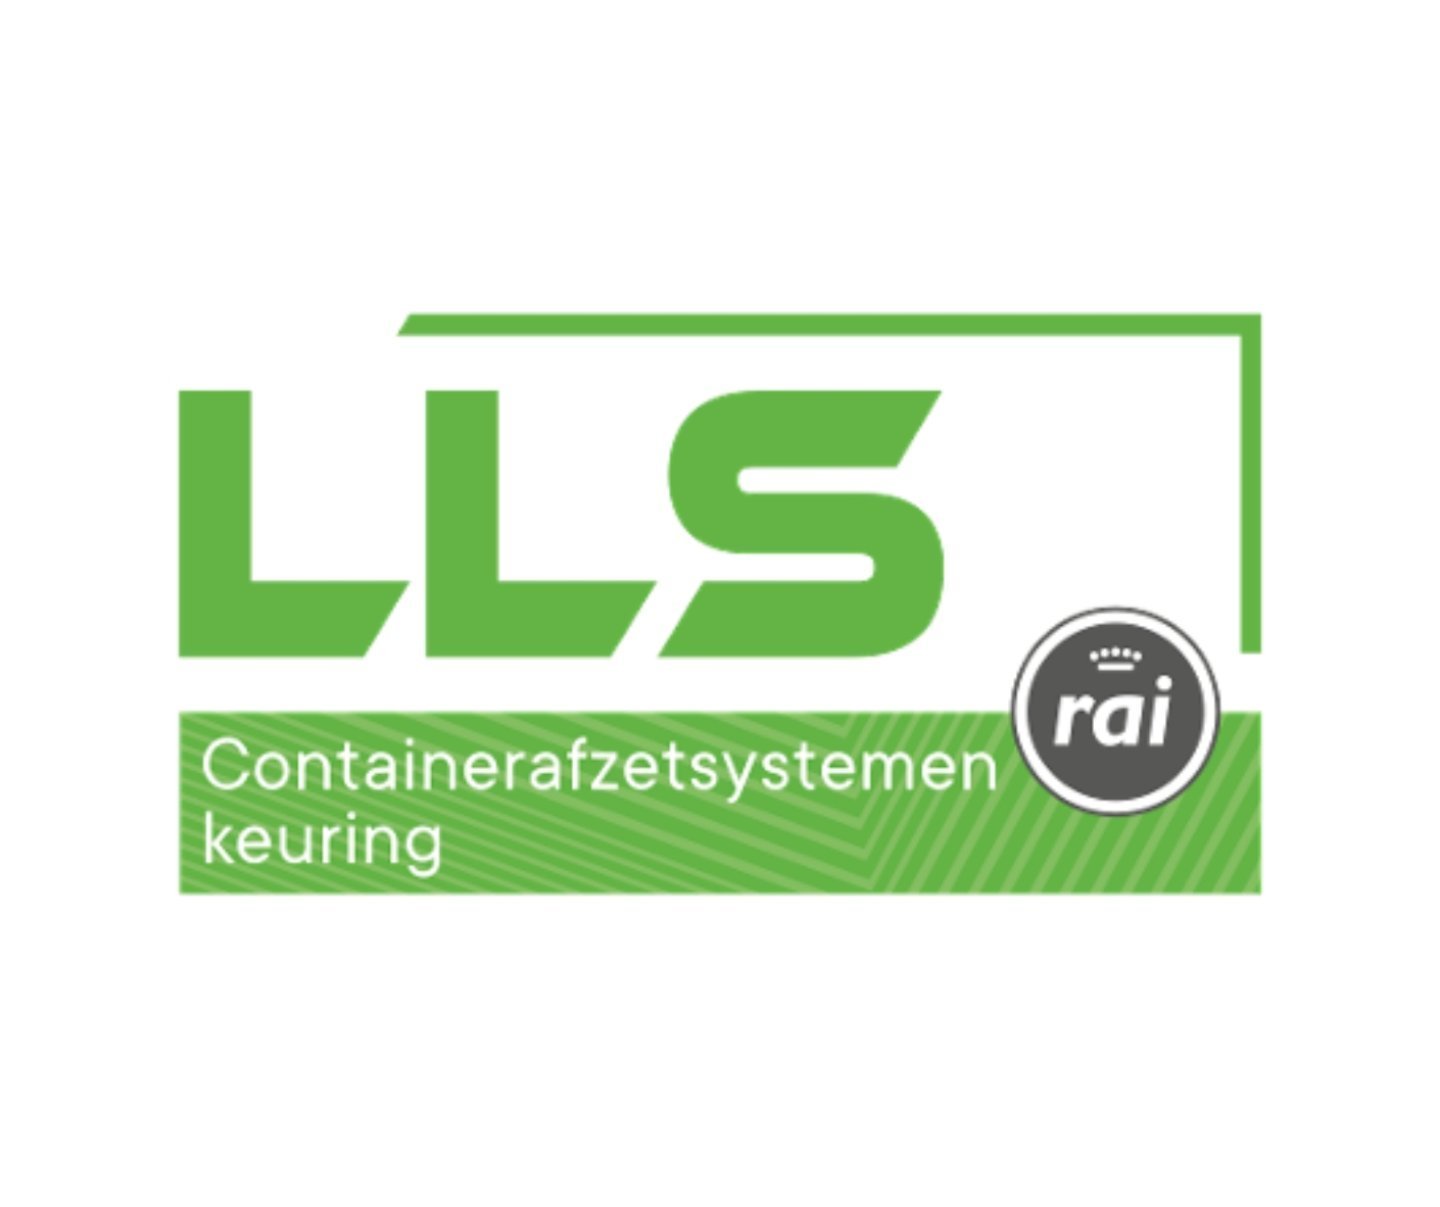 Keurmerk Containerafzetsystemen (LLS)